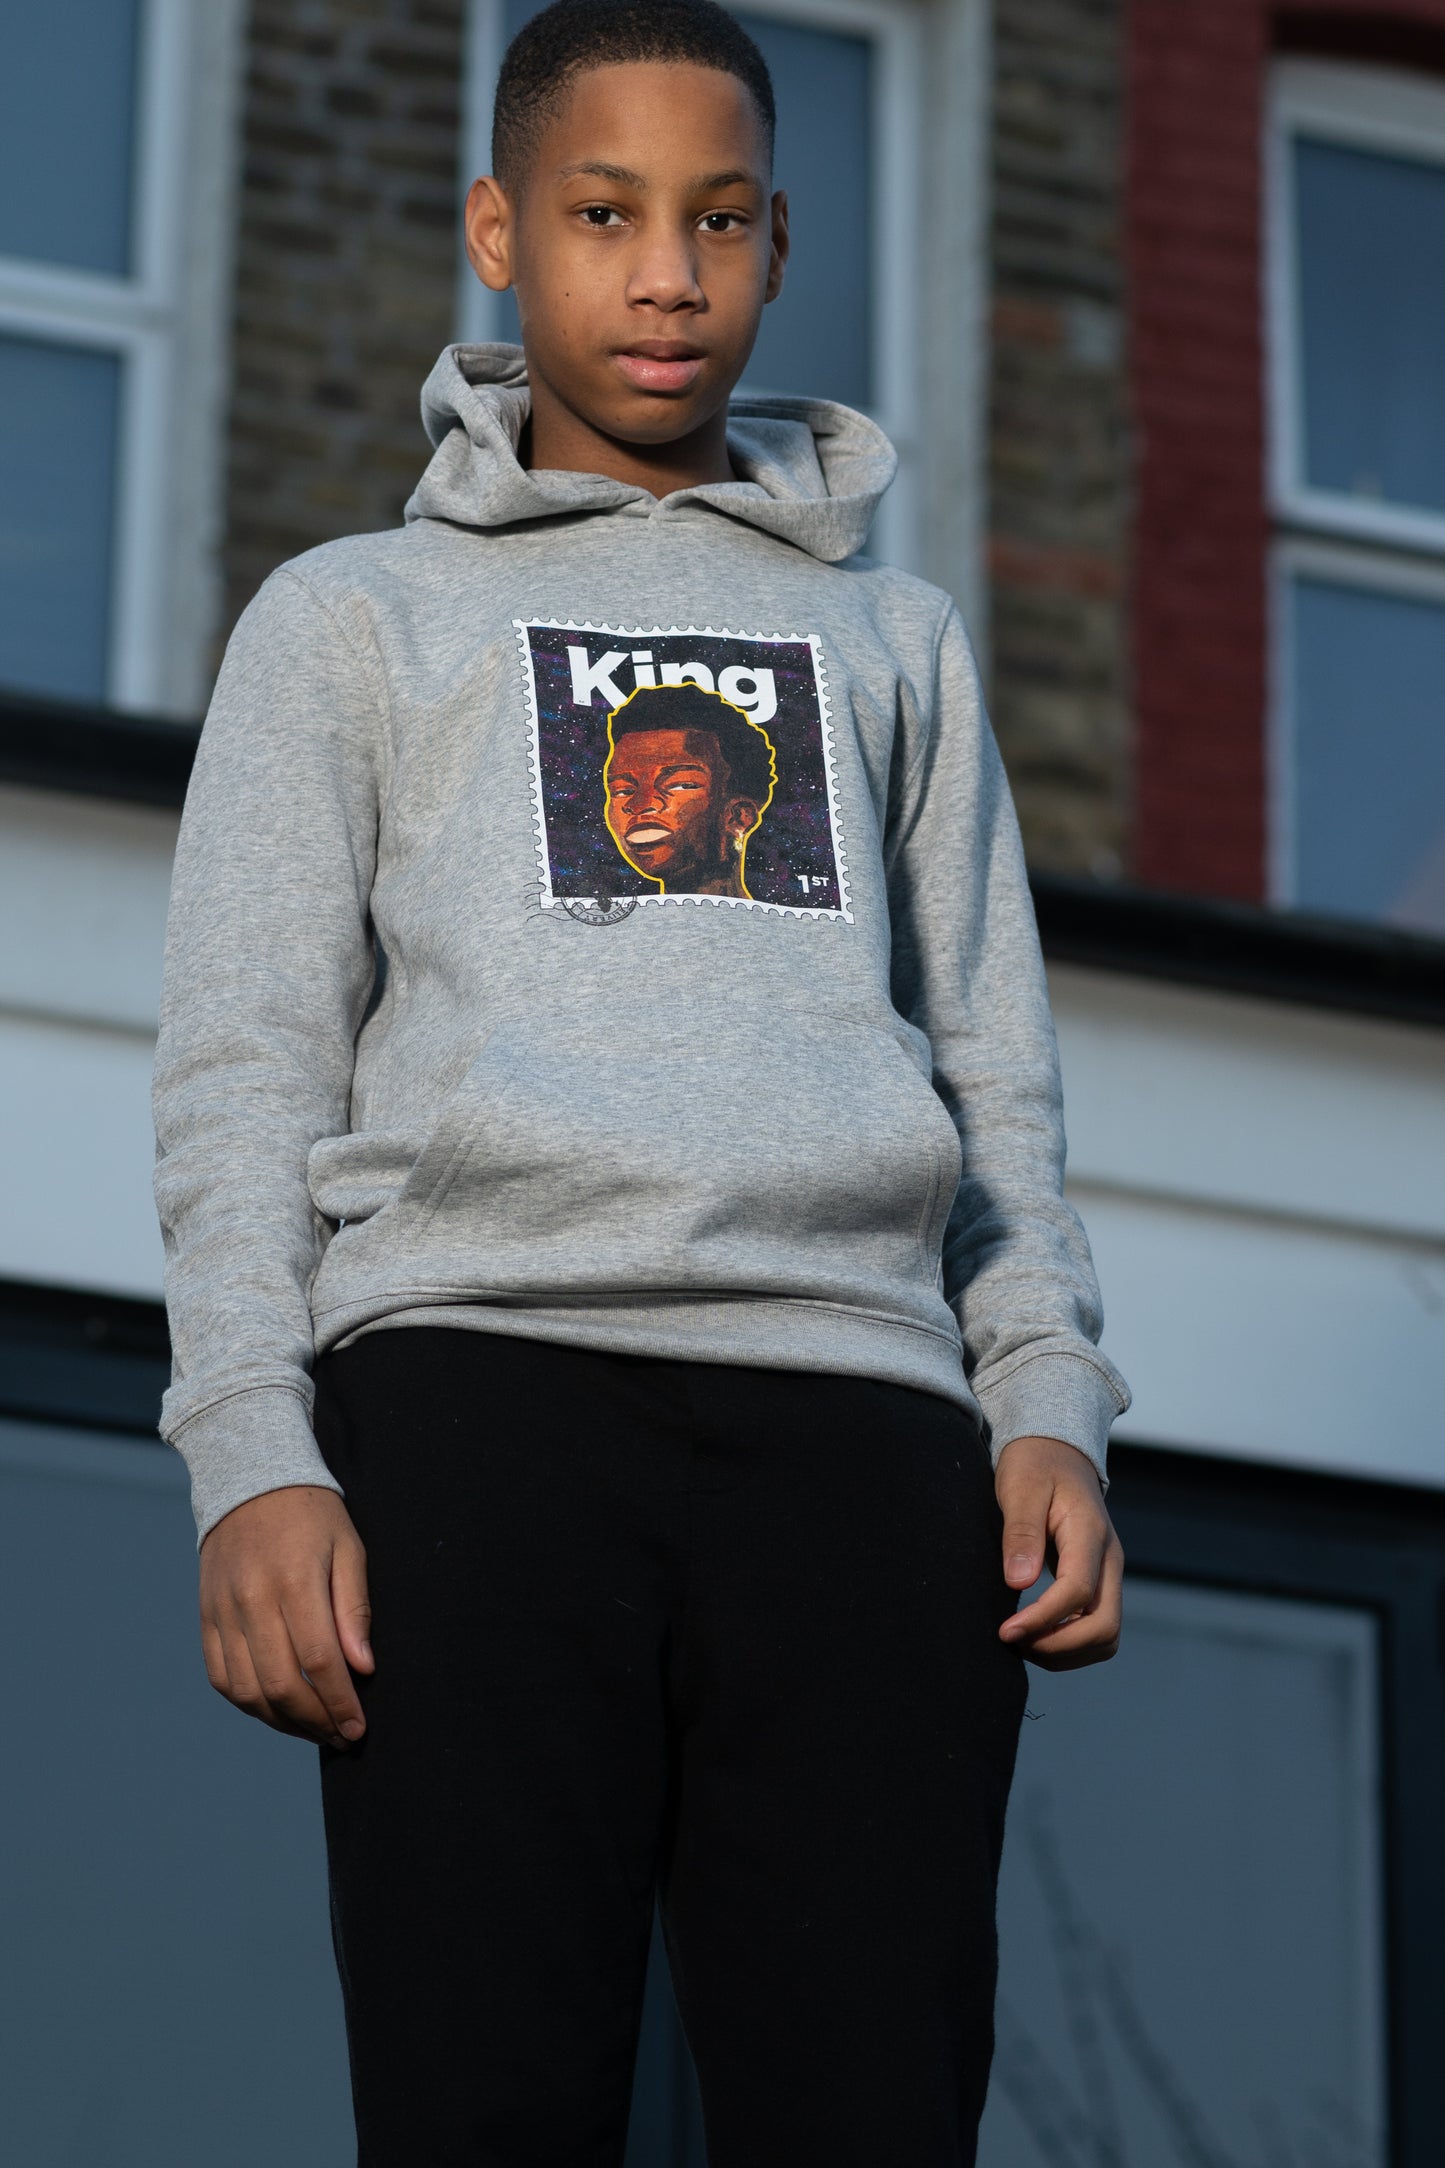 "King Junior" Organic Cotton Hoodie